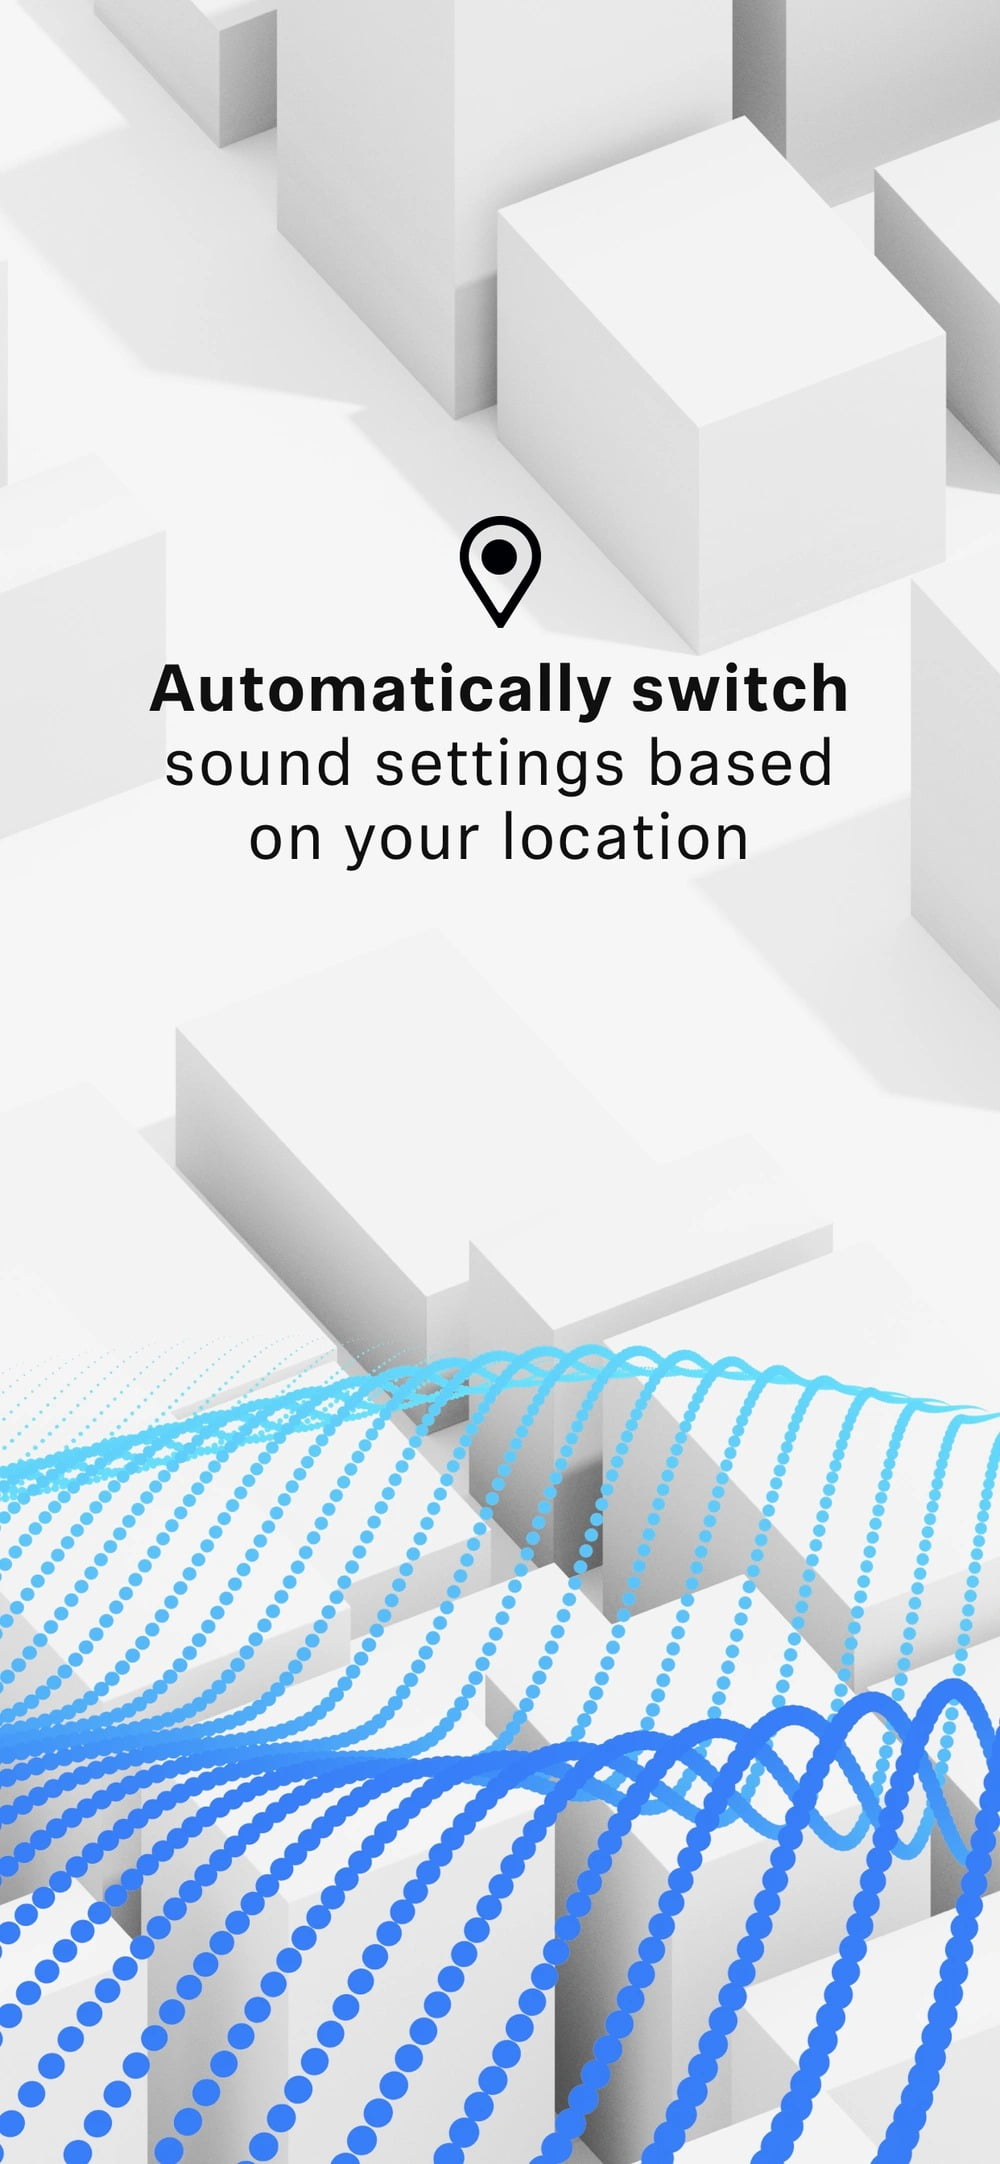 Khu vuc am thanh Sound Zone Sennheiser Smart Control App